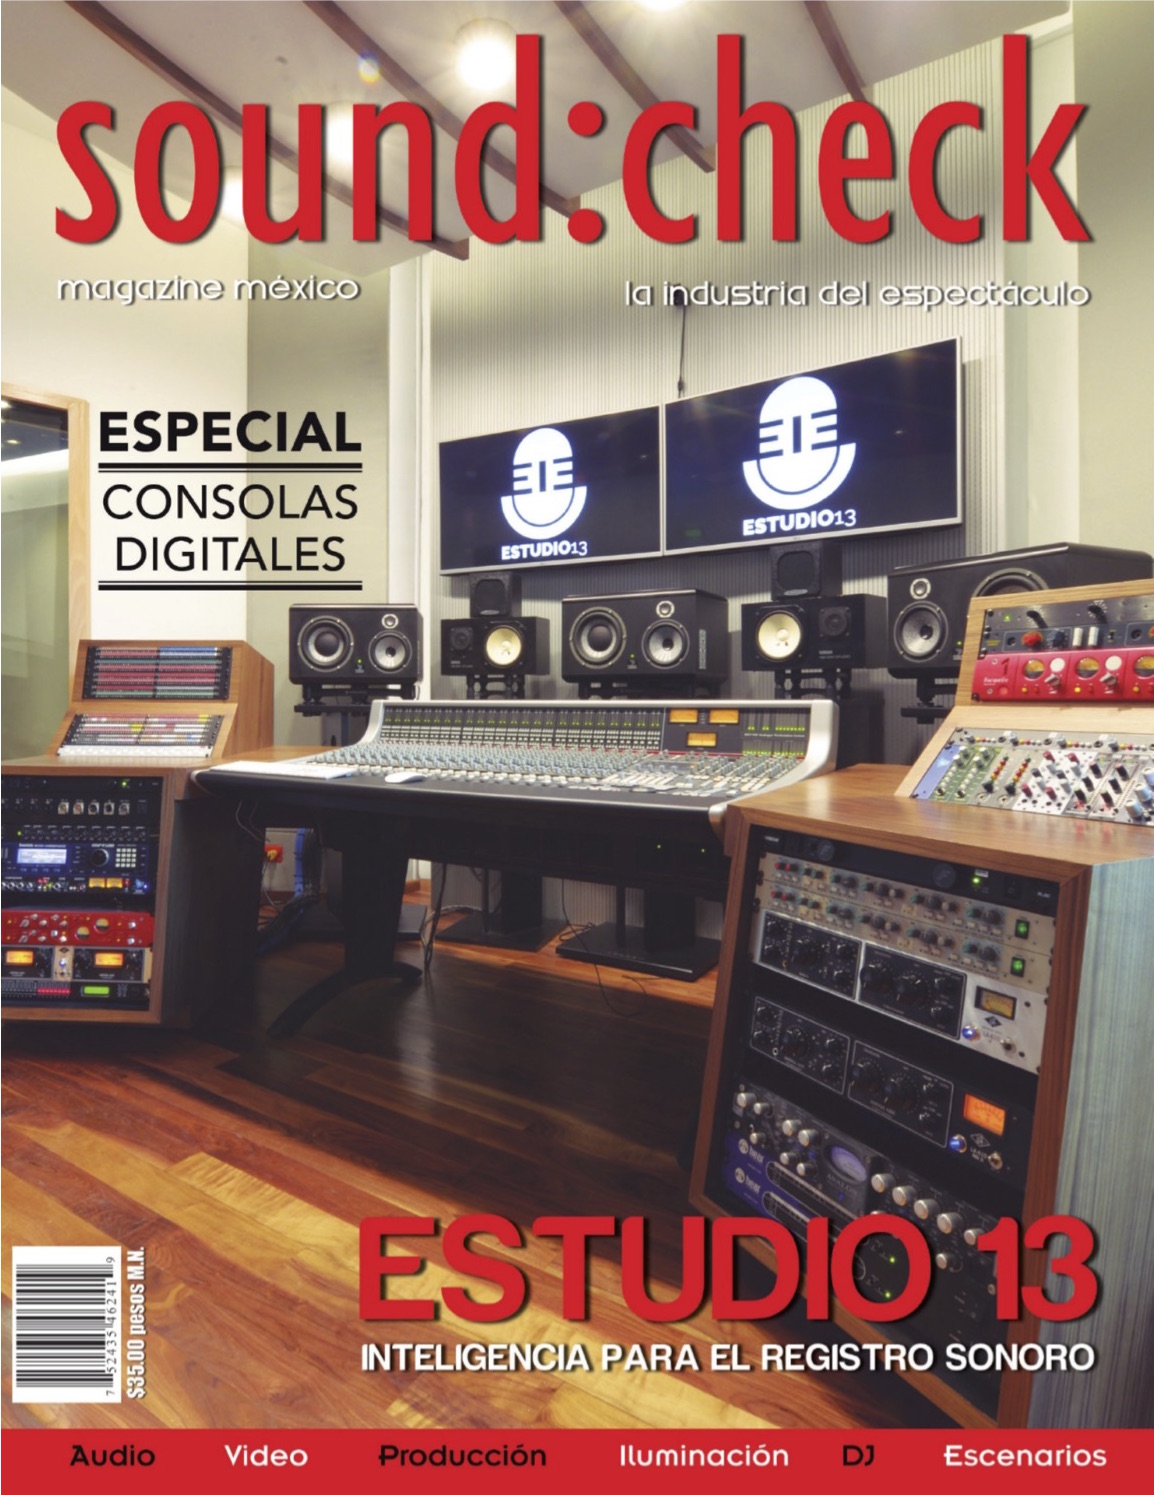 Estudio13-soundcheck-Cover